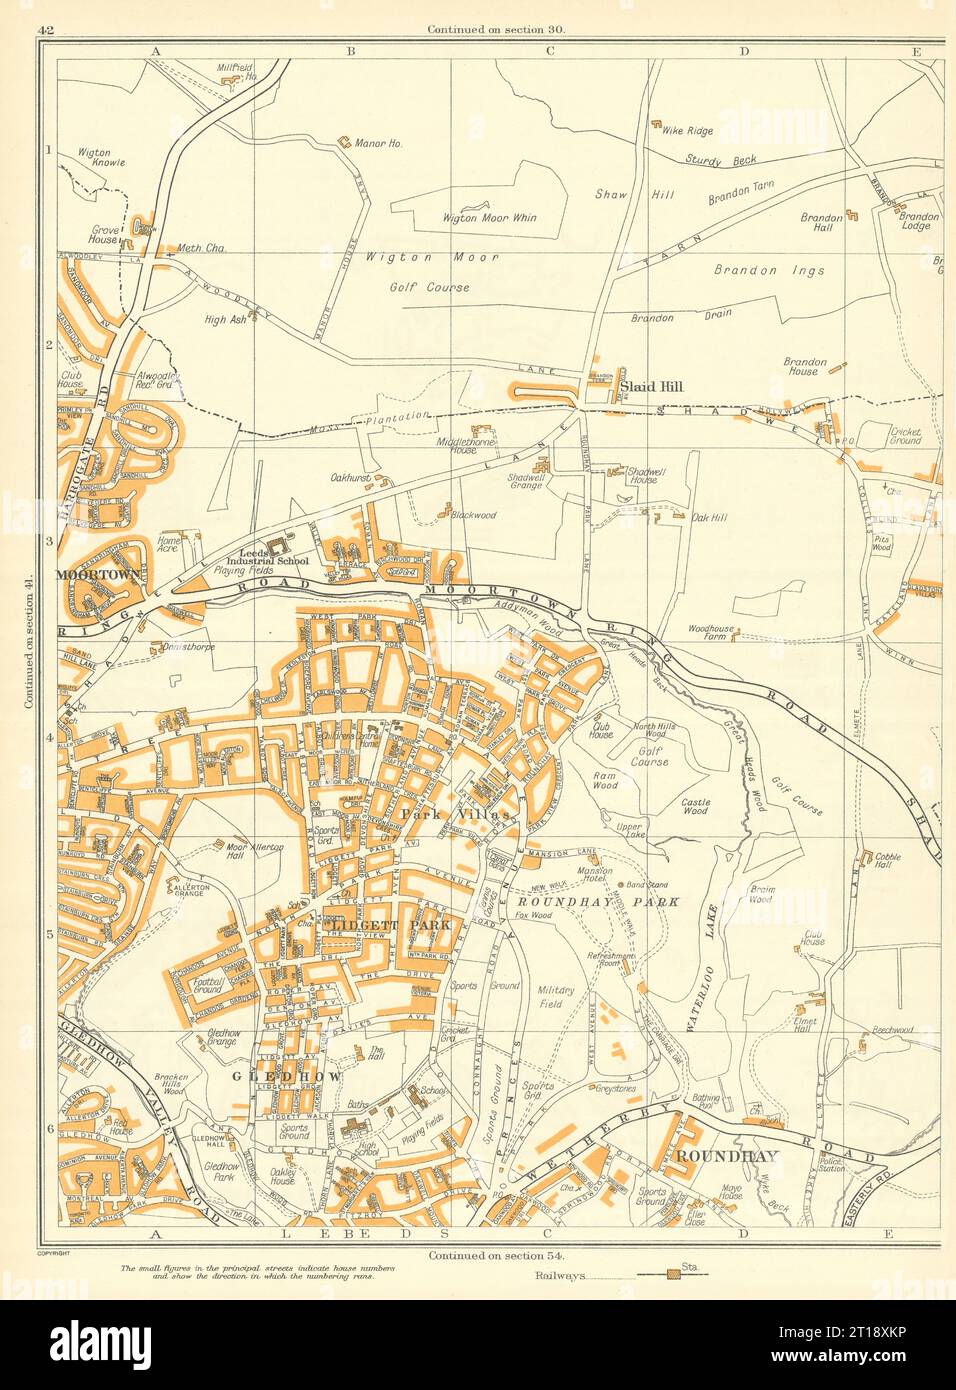 LEEDS Slaid Hill Gledhow Roundhay Lidgett Park Moortown Roundhay 1935 old map Stock Photo